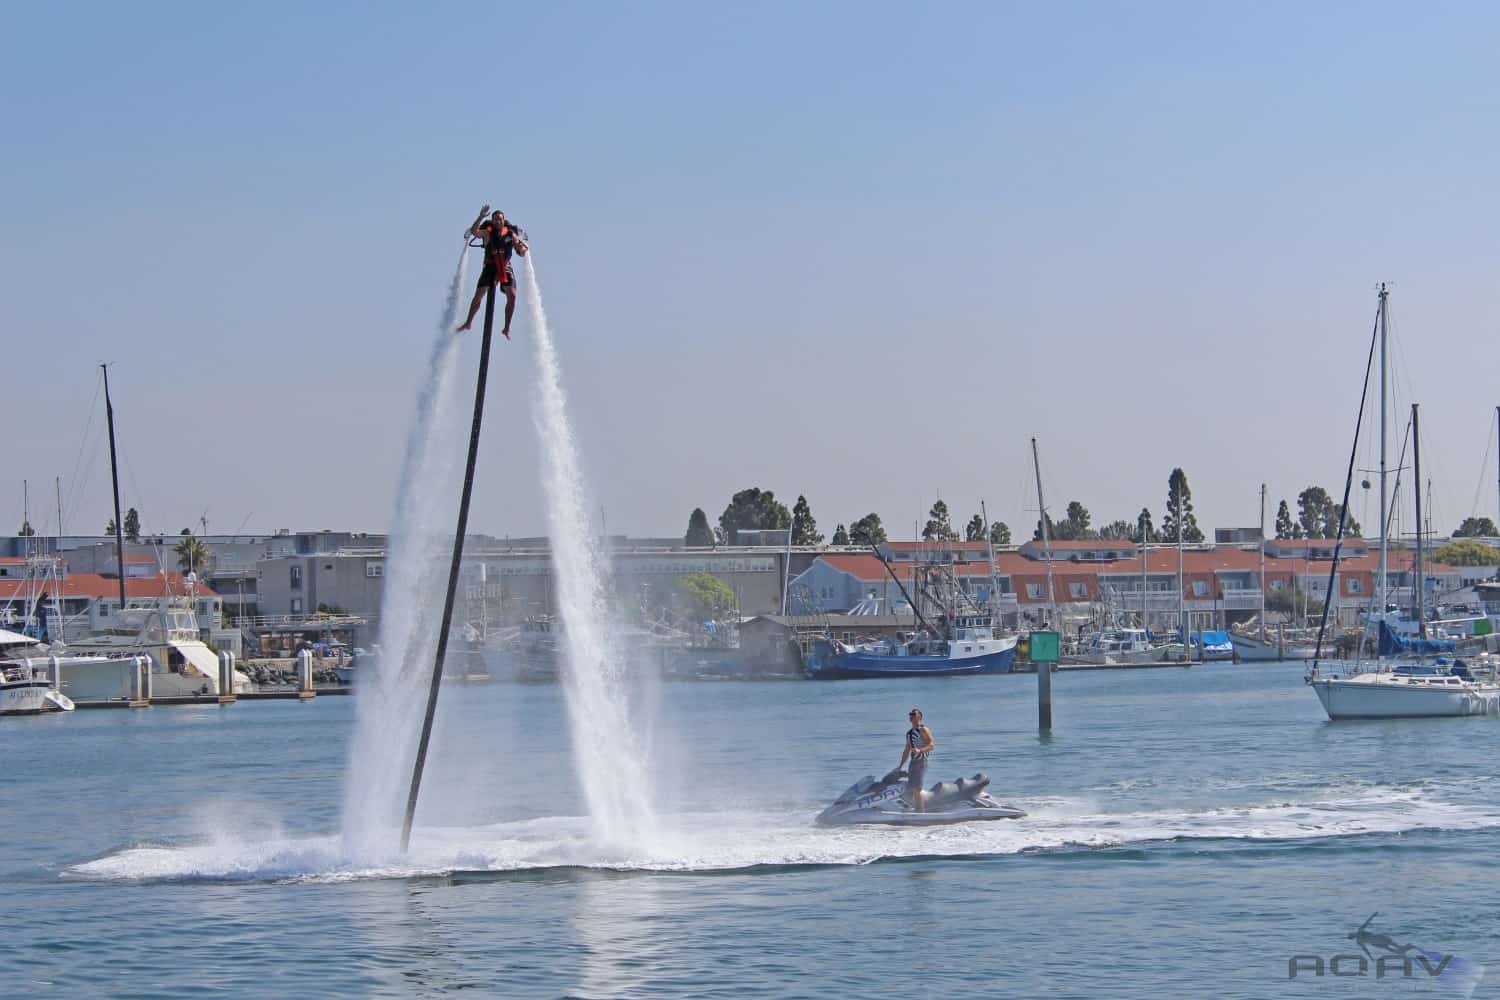 zapata racing water powered jetpack rentals san diego